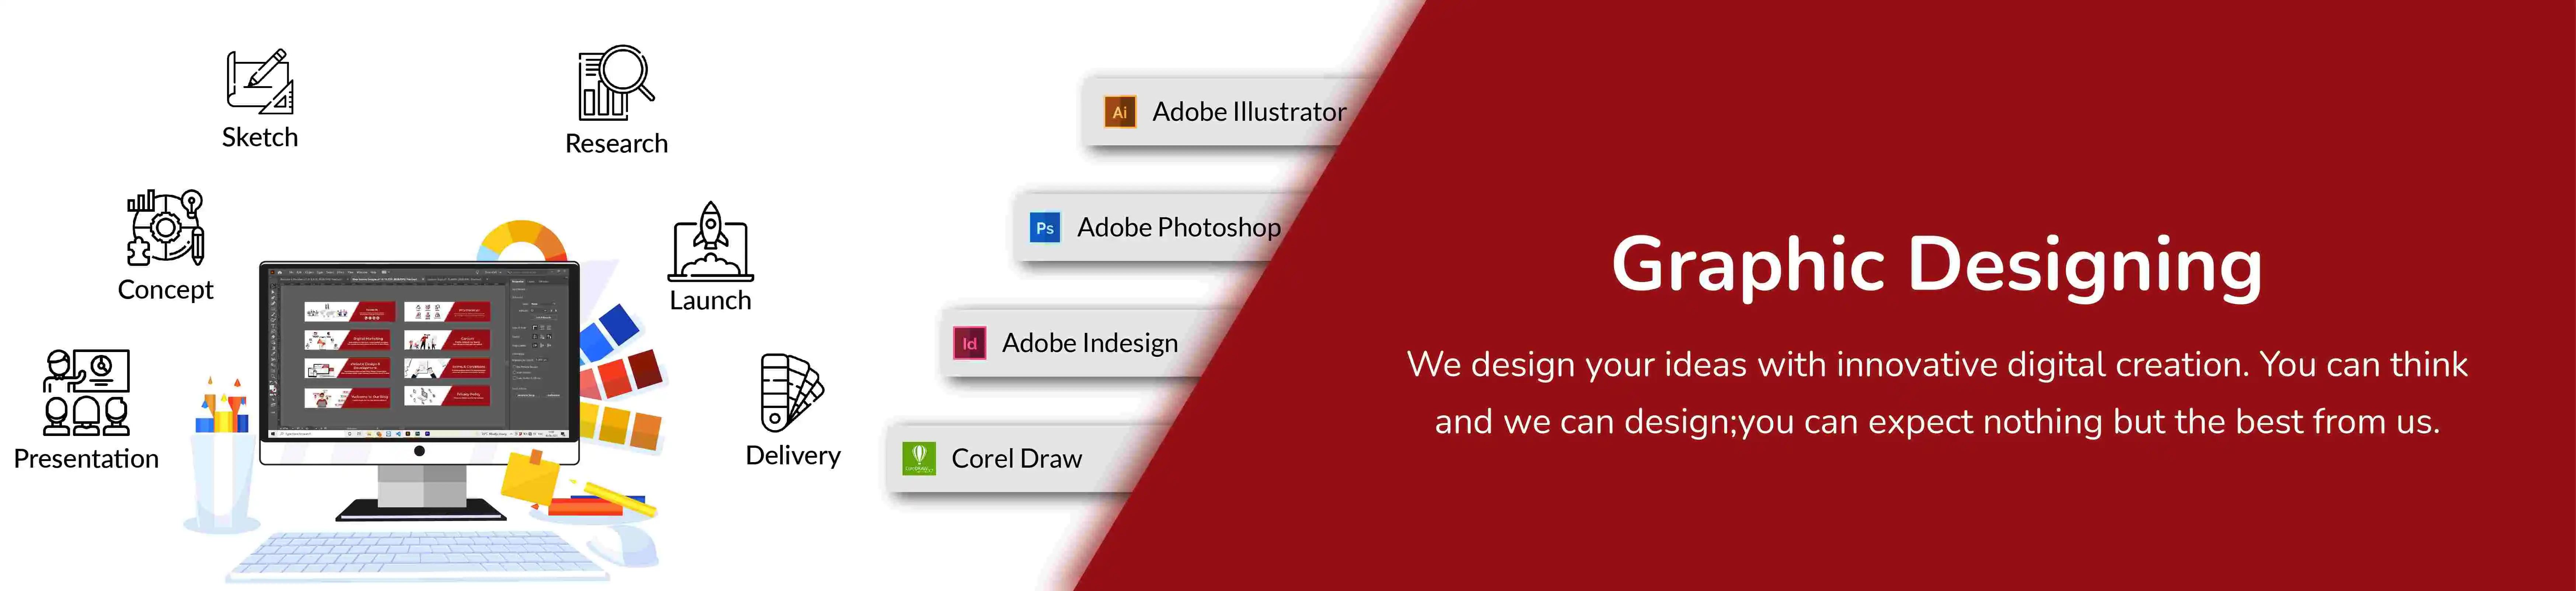 graphics-design-banner.webp